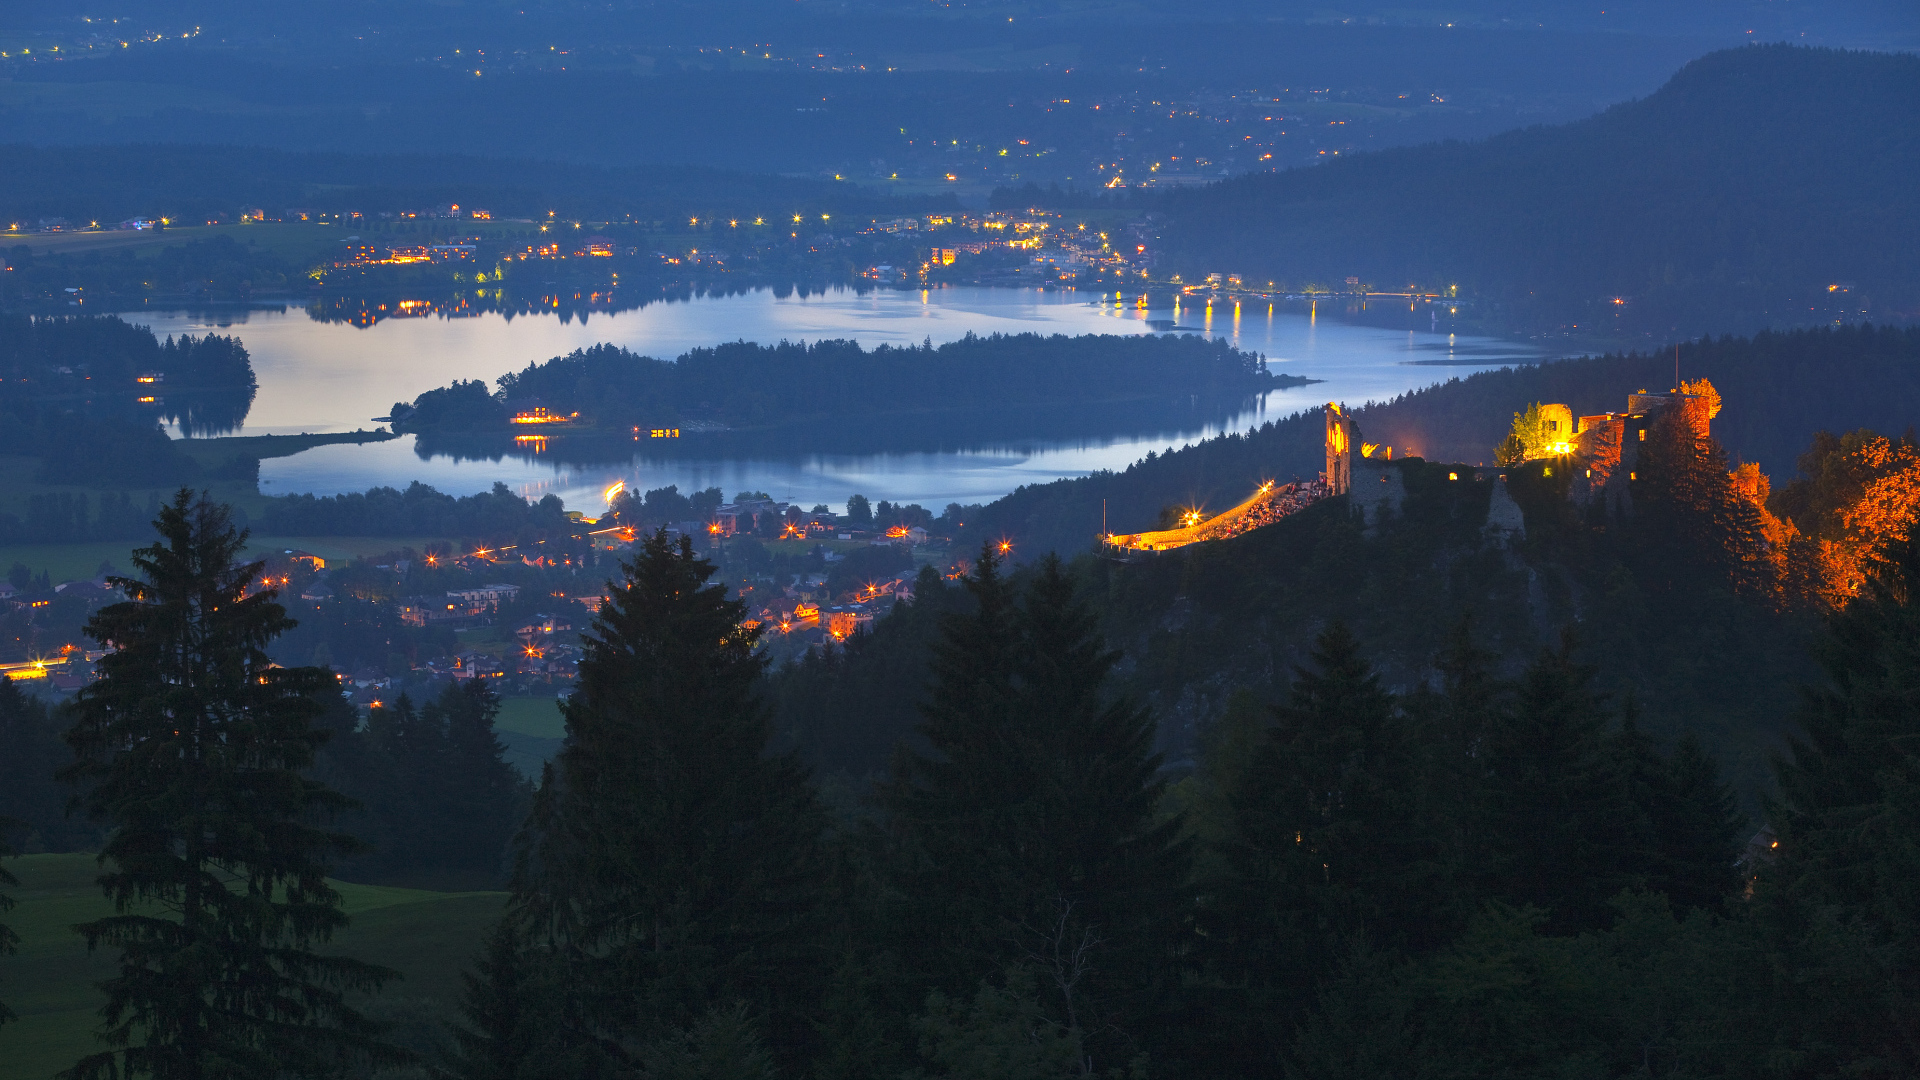 Ночные огни на курорте Фаакер-Зее, Австрия